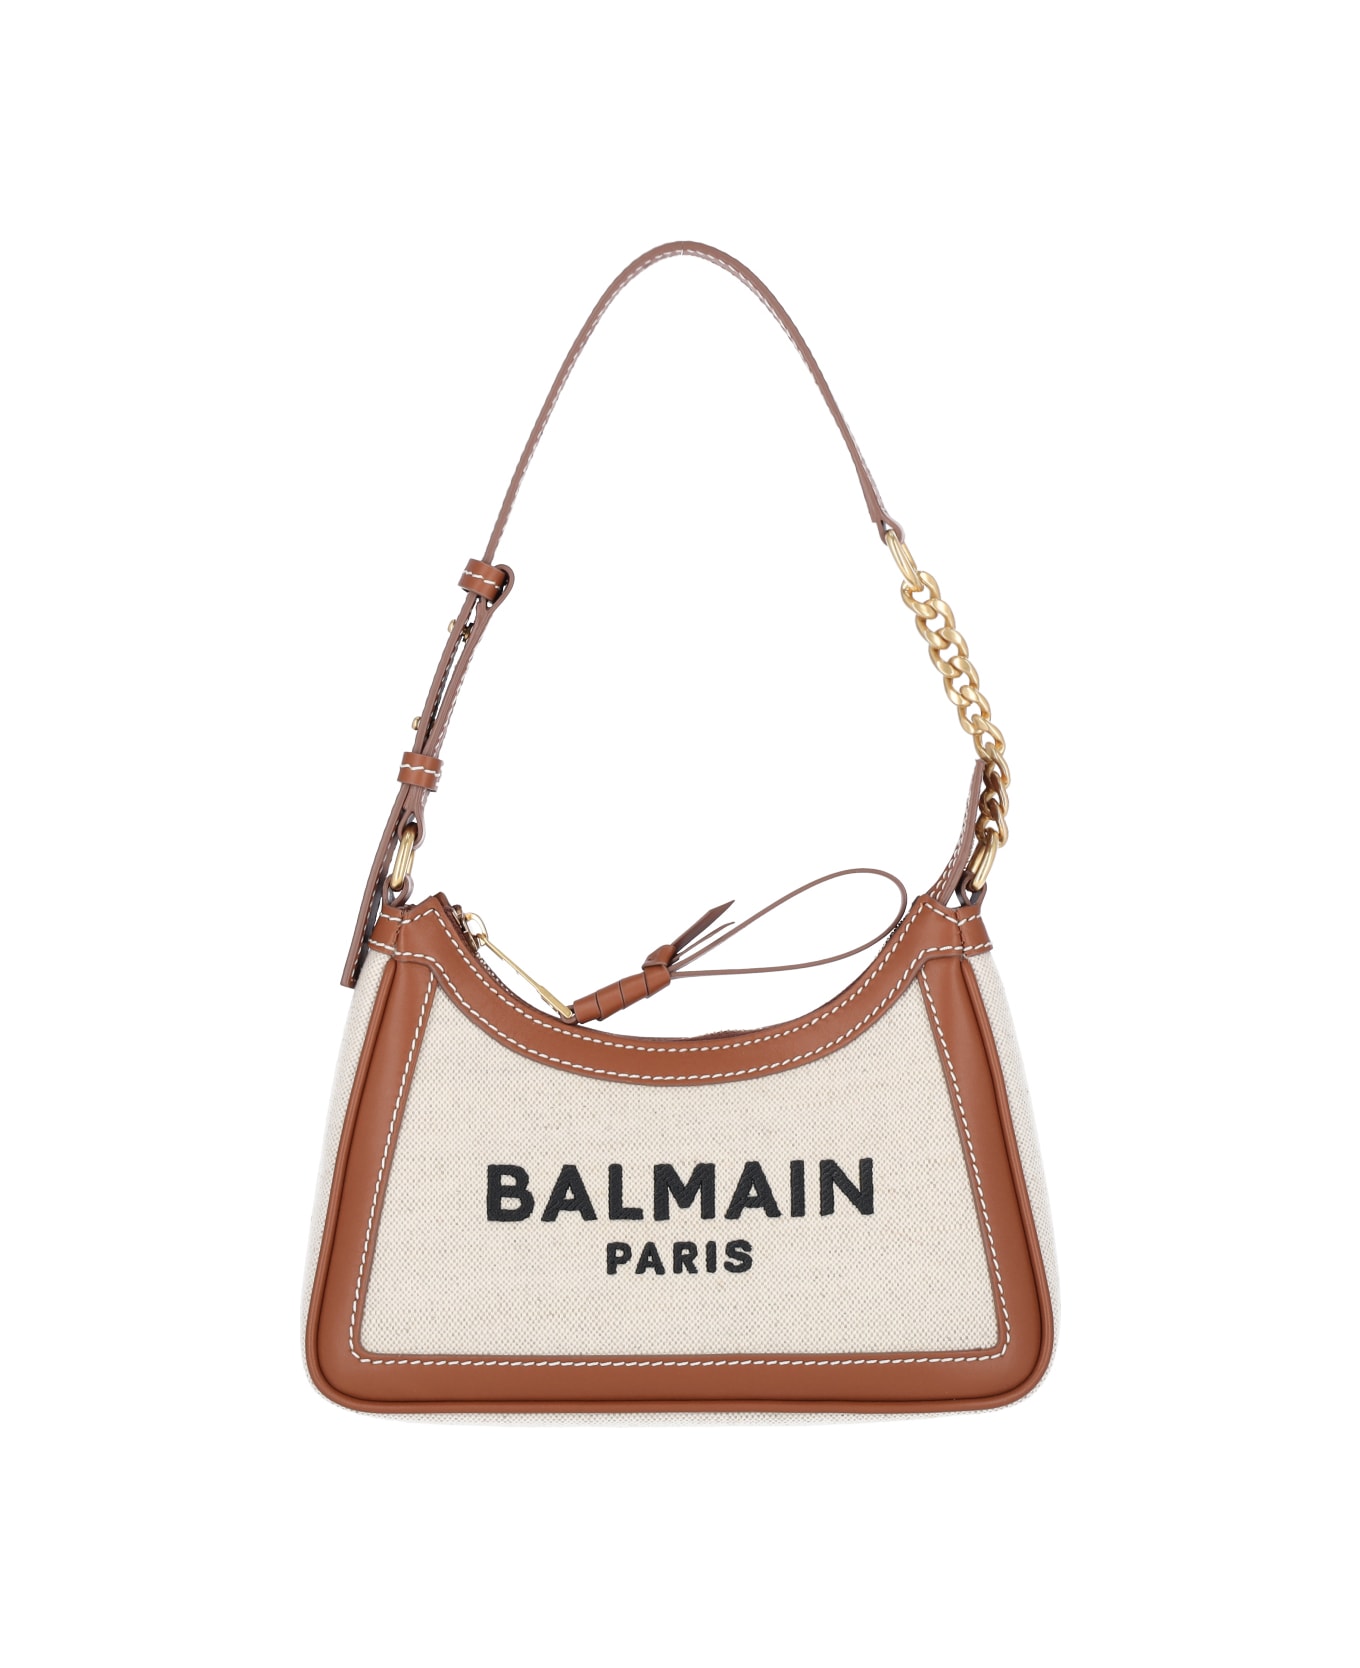 Balmain 'b-army' Shoulder Bag - Natuler/marron